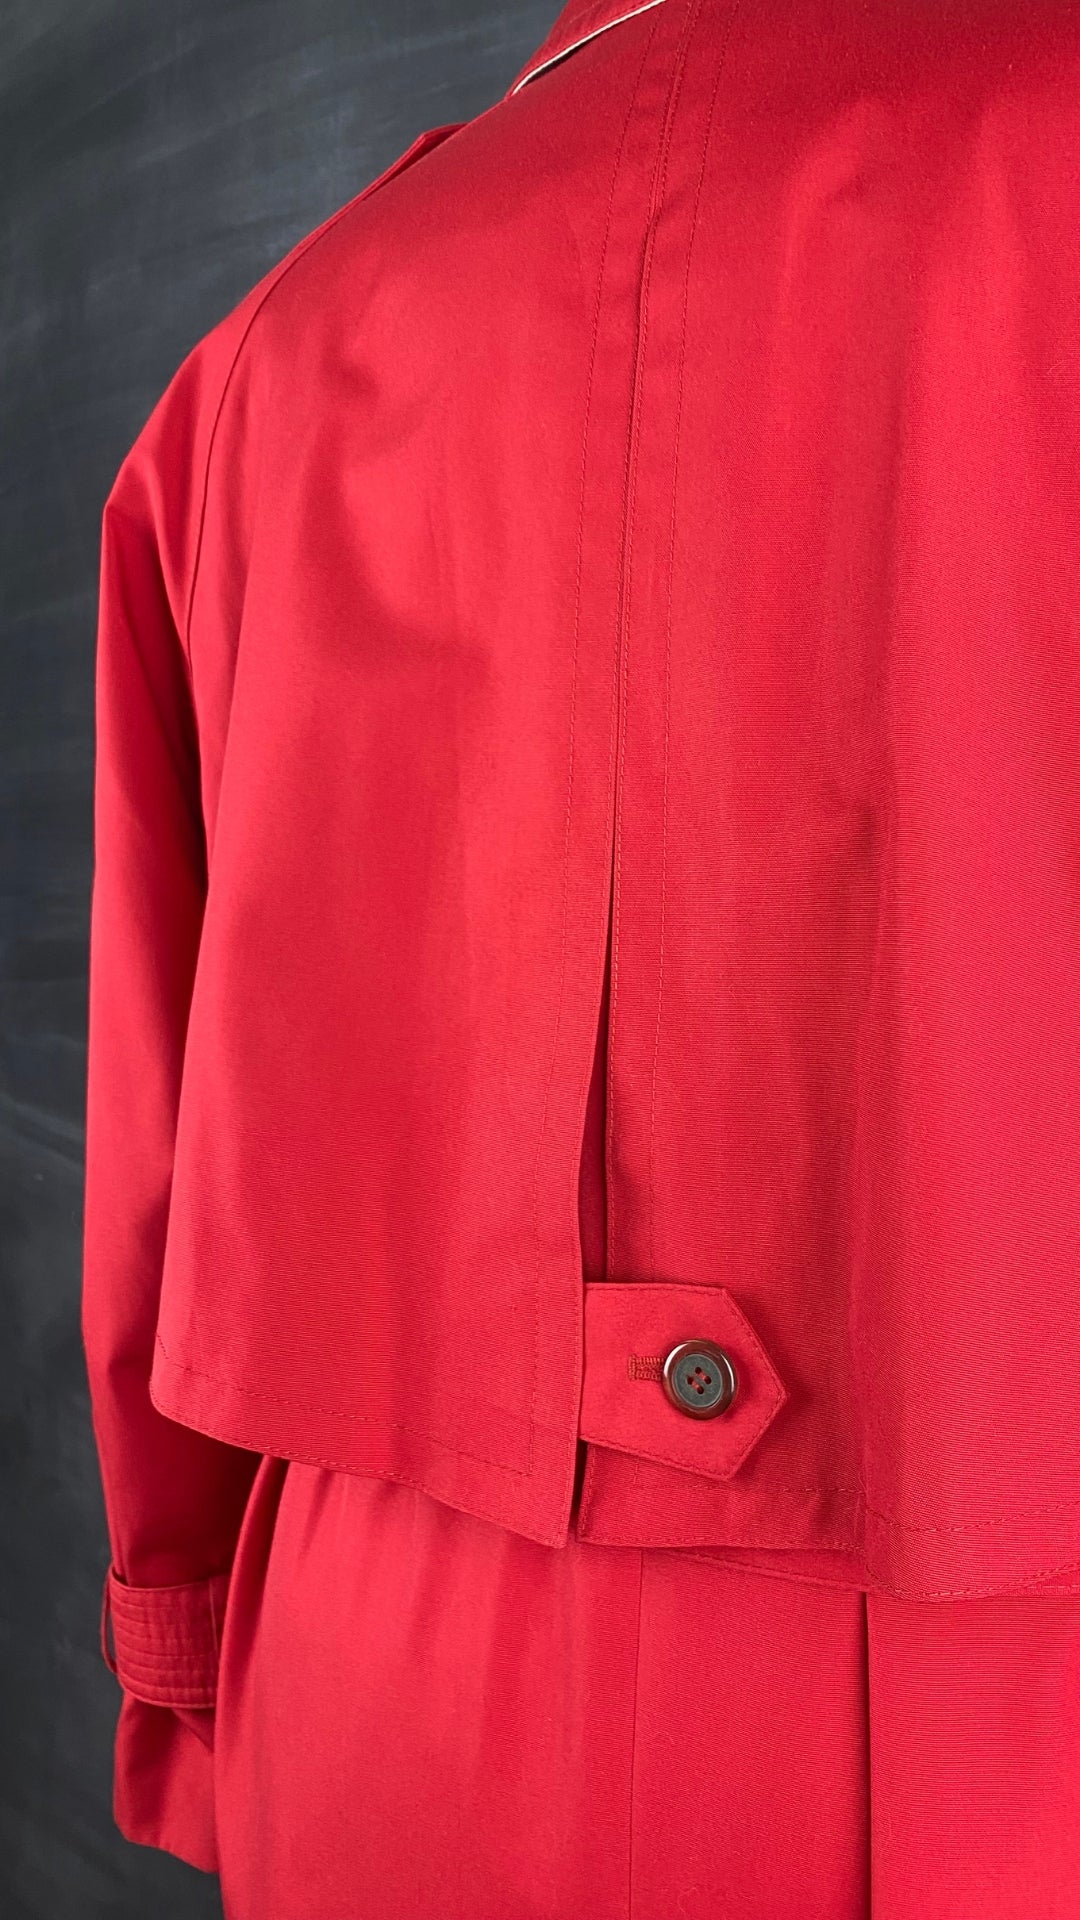 Manteau long vintage style trench rouge, taille small/medium. Vue du bavolet au dos.